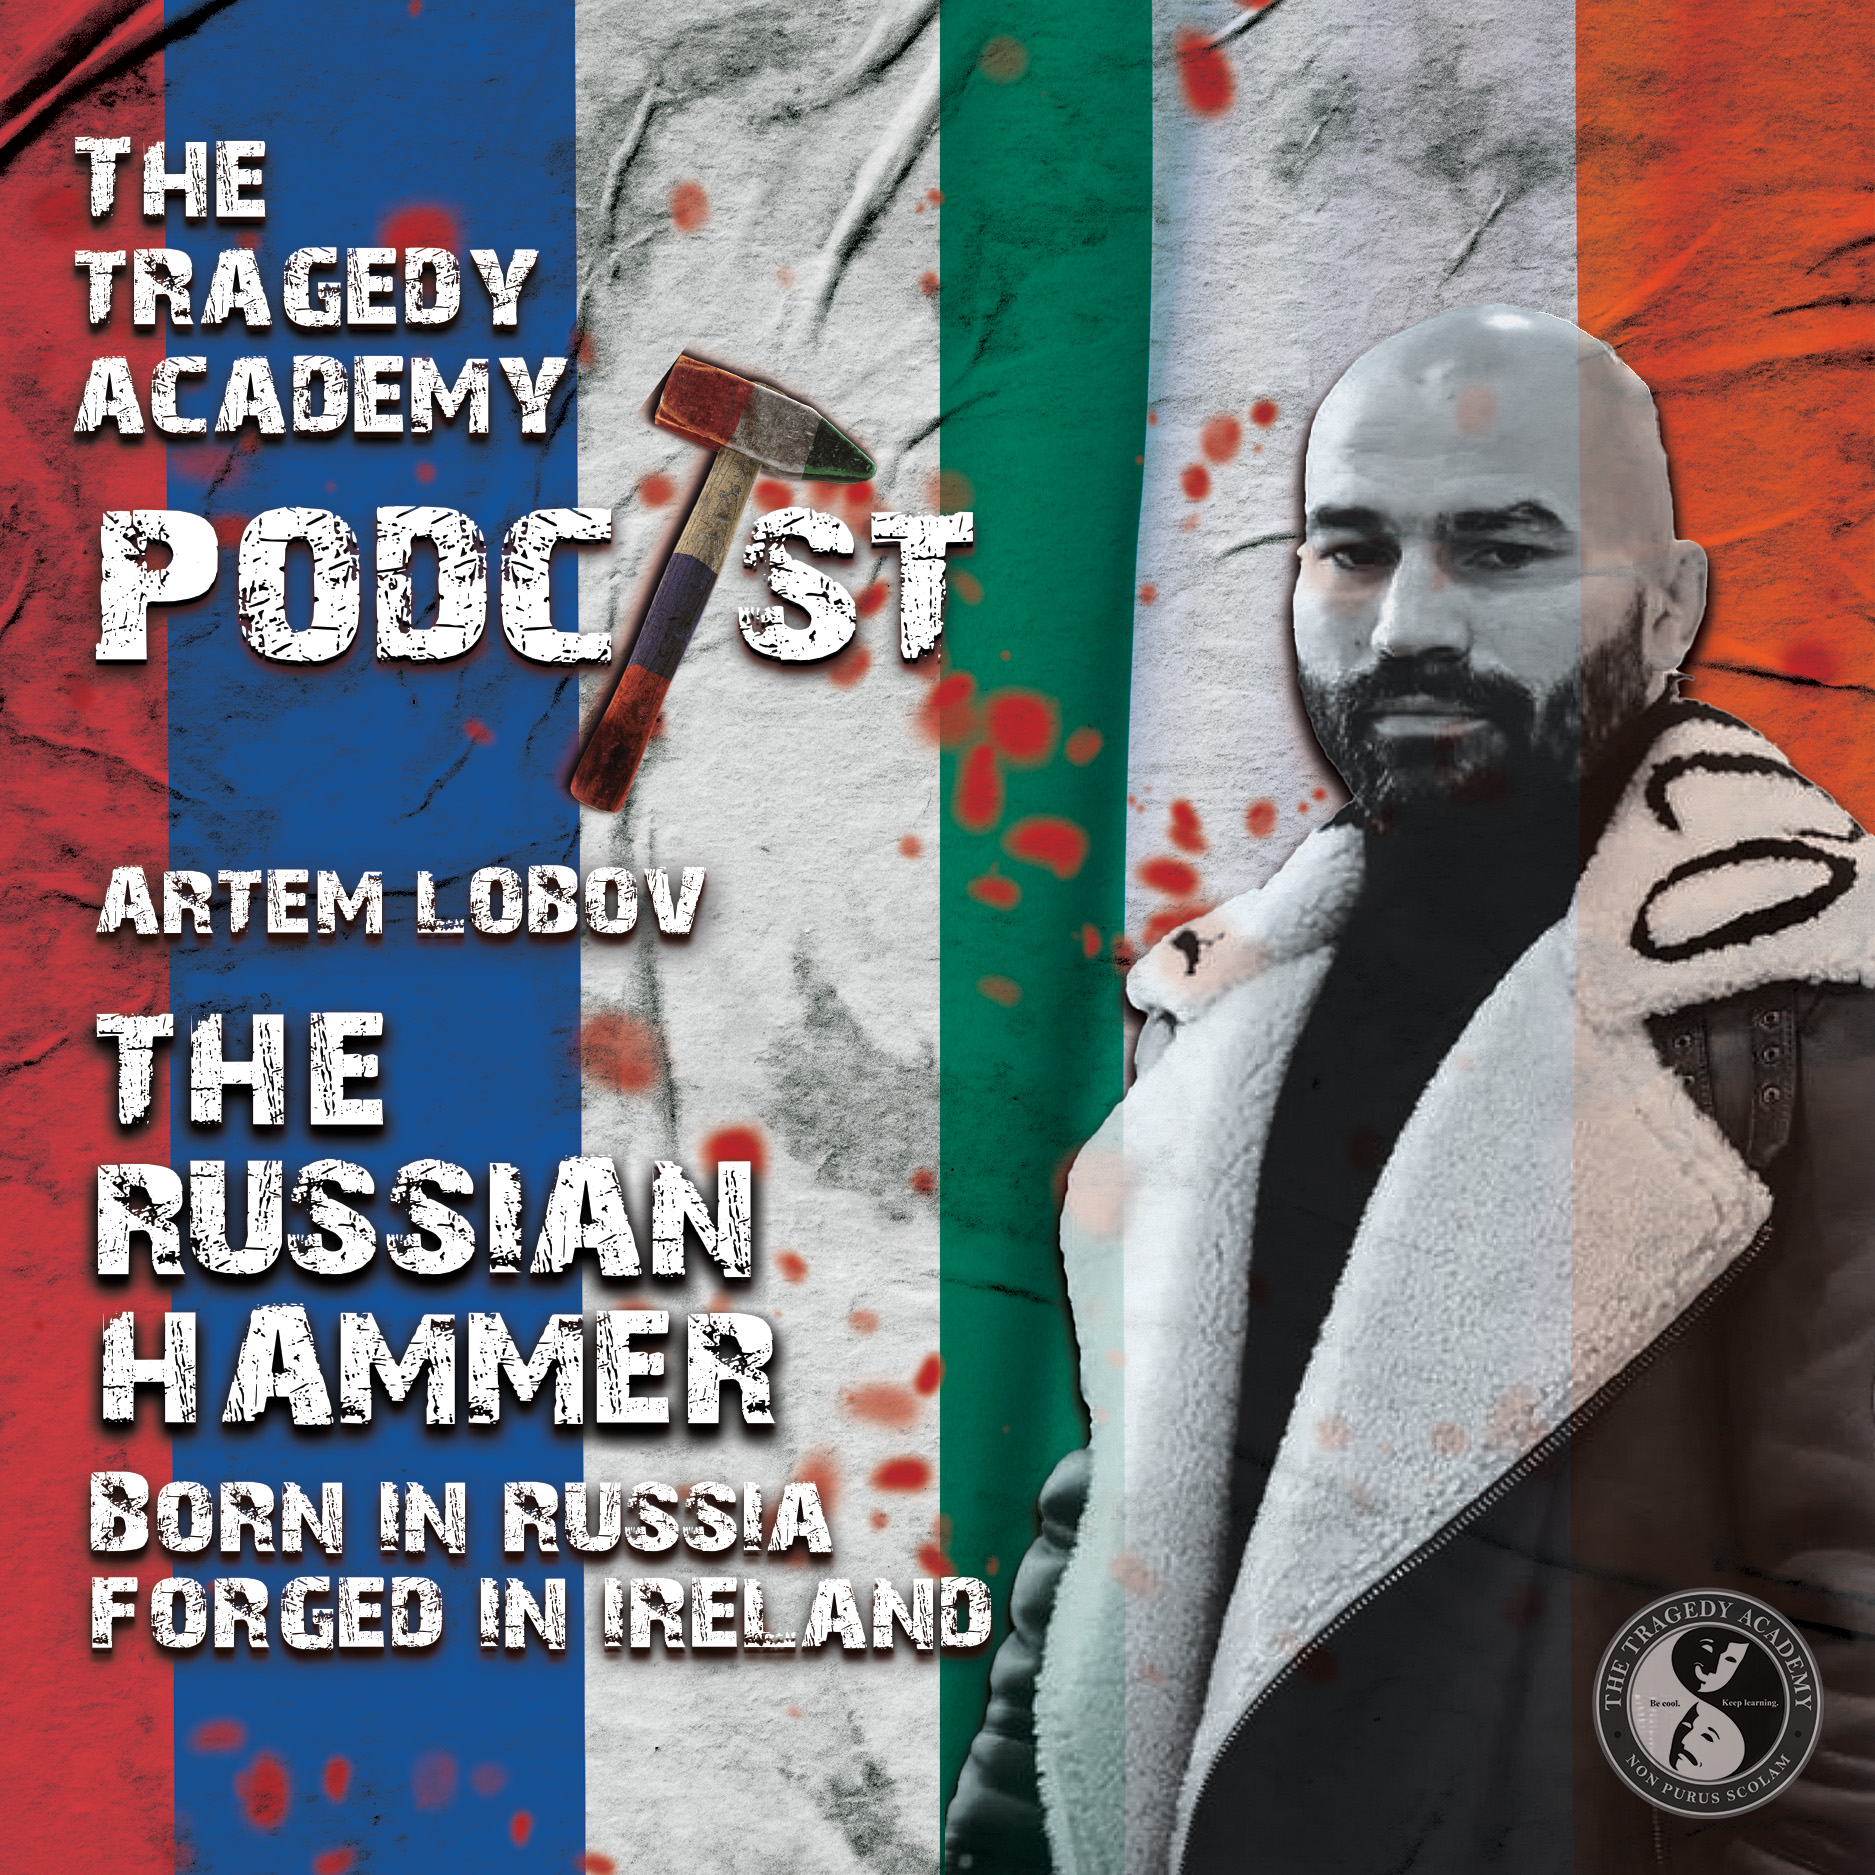 Artem Lobov - The Russian Hammer Image